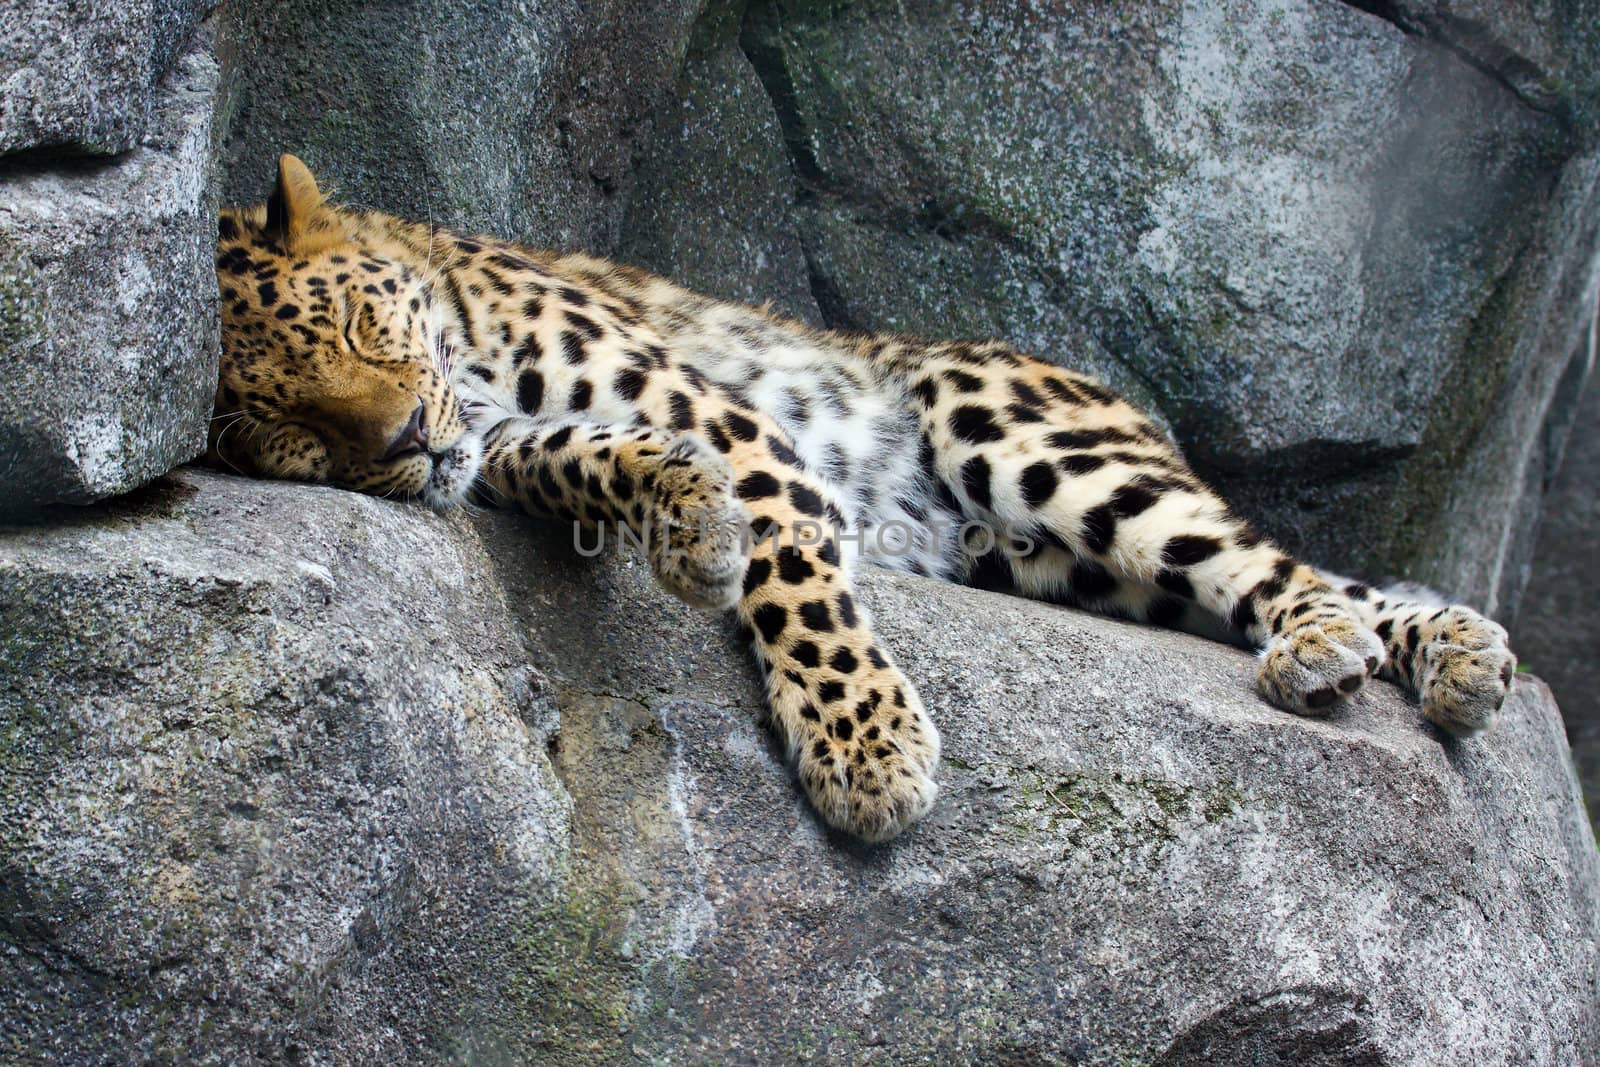 An Amur Leopard gets some rest on a rock.